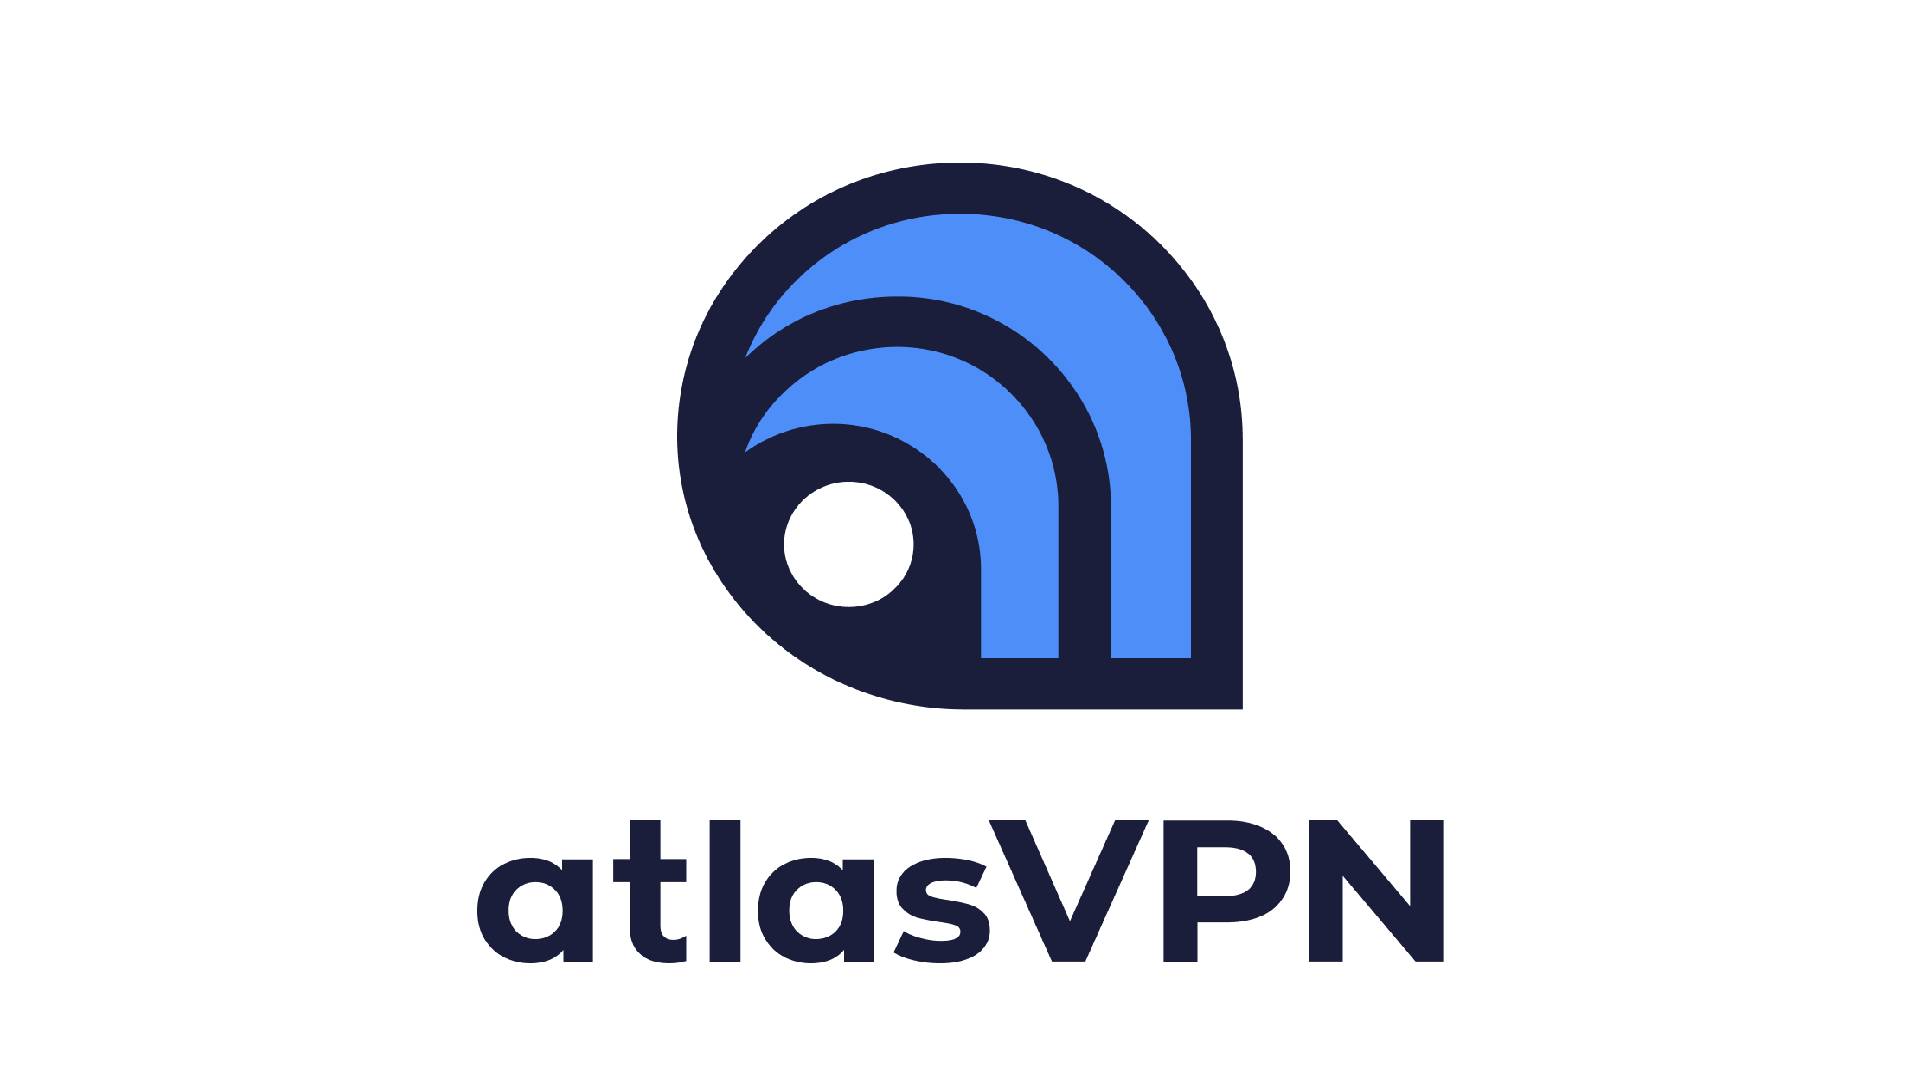 Best free VPN, option 3 - AtlasVPN. Image shows the logo of AtlasVPN.